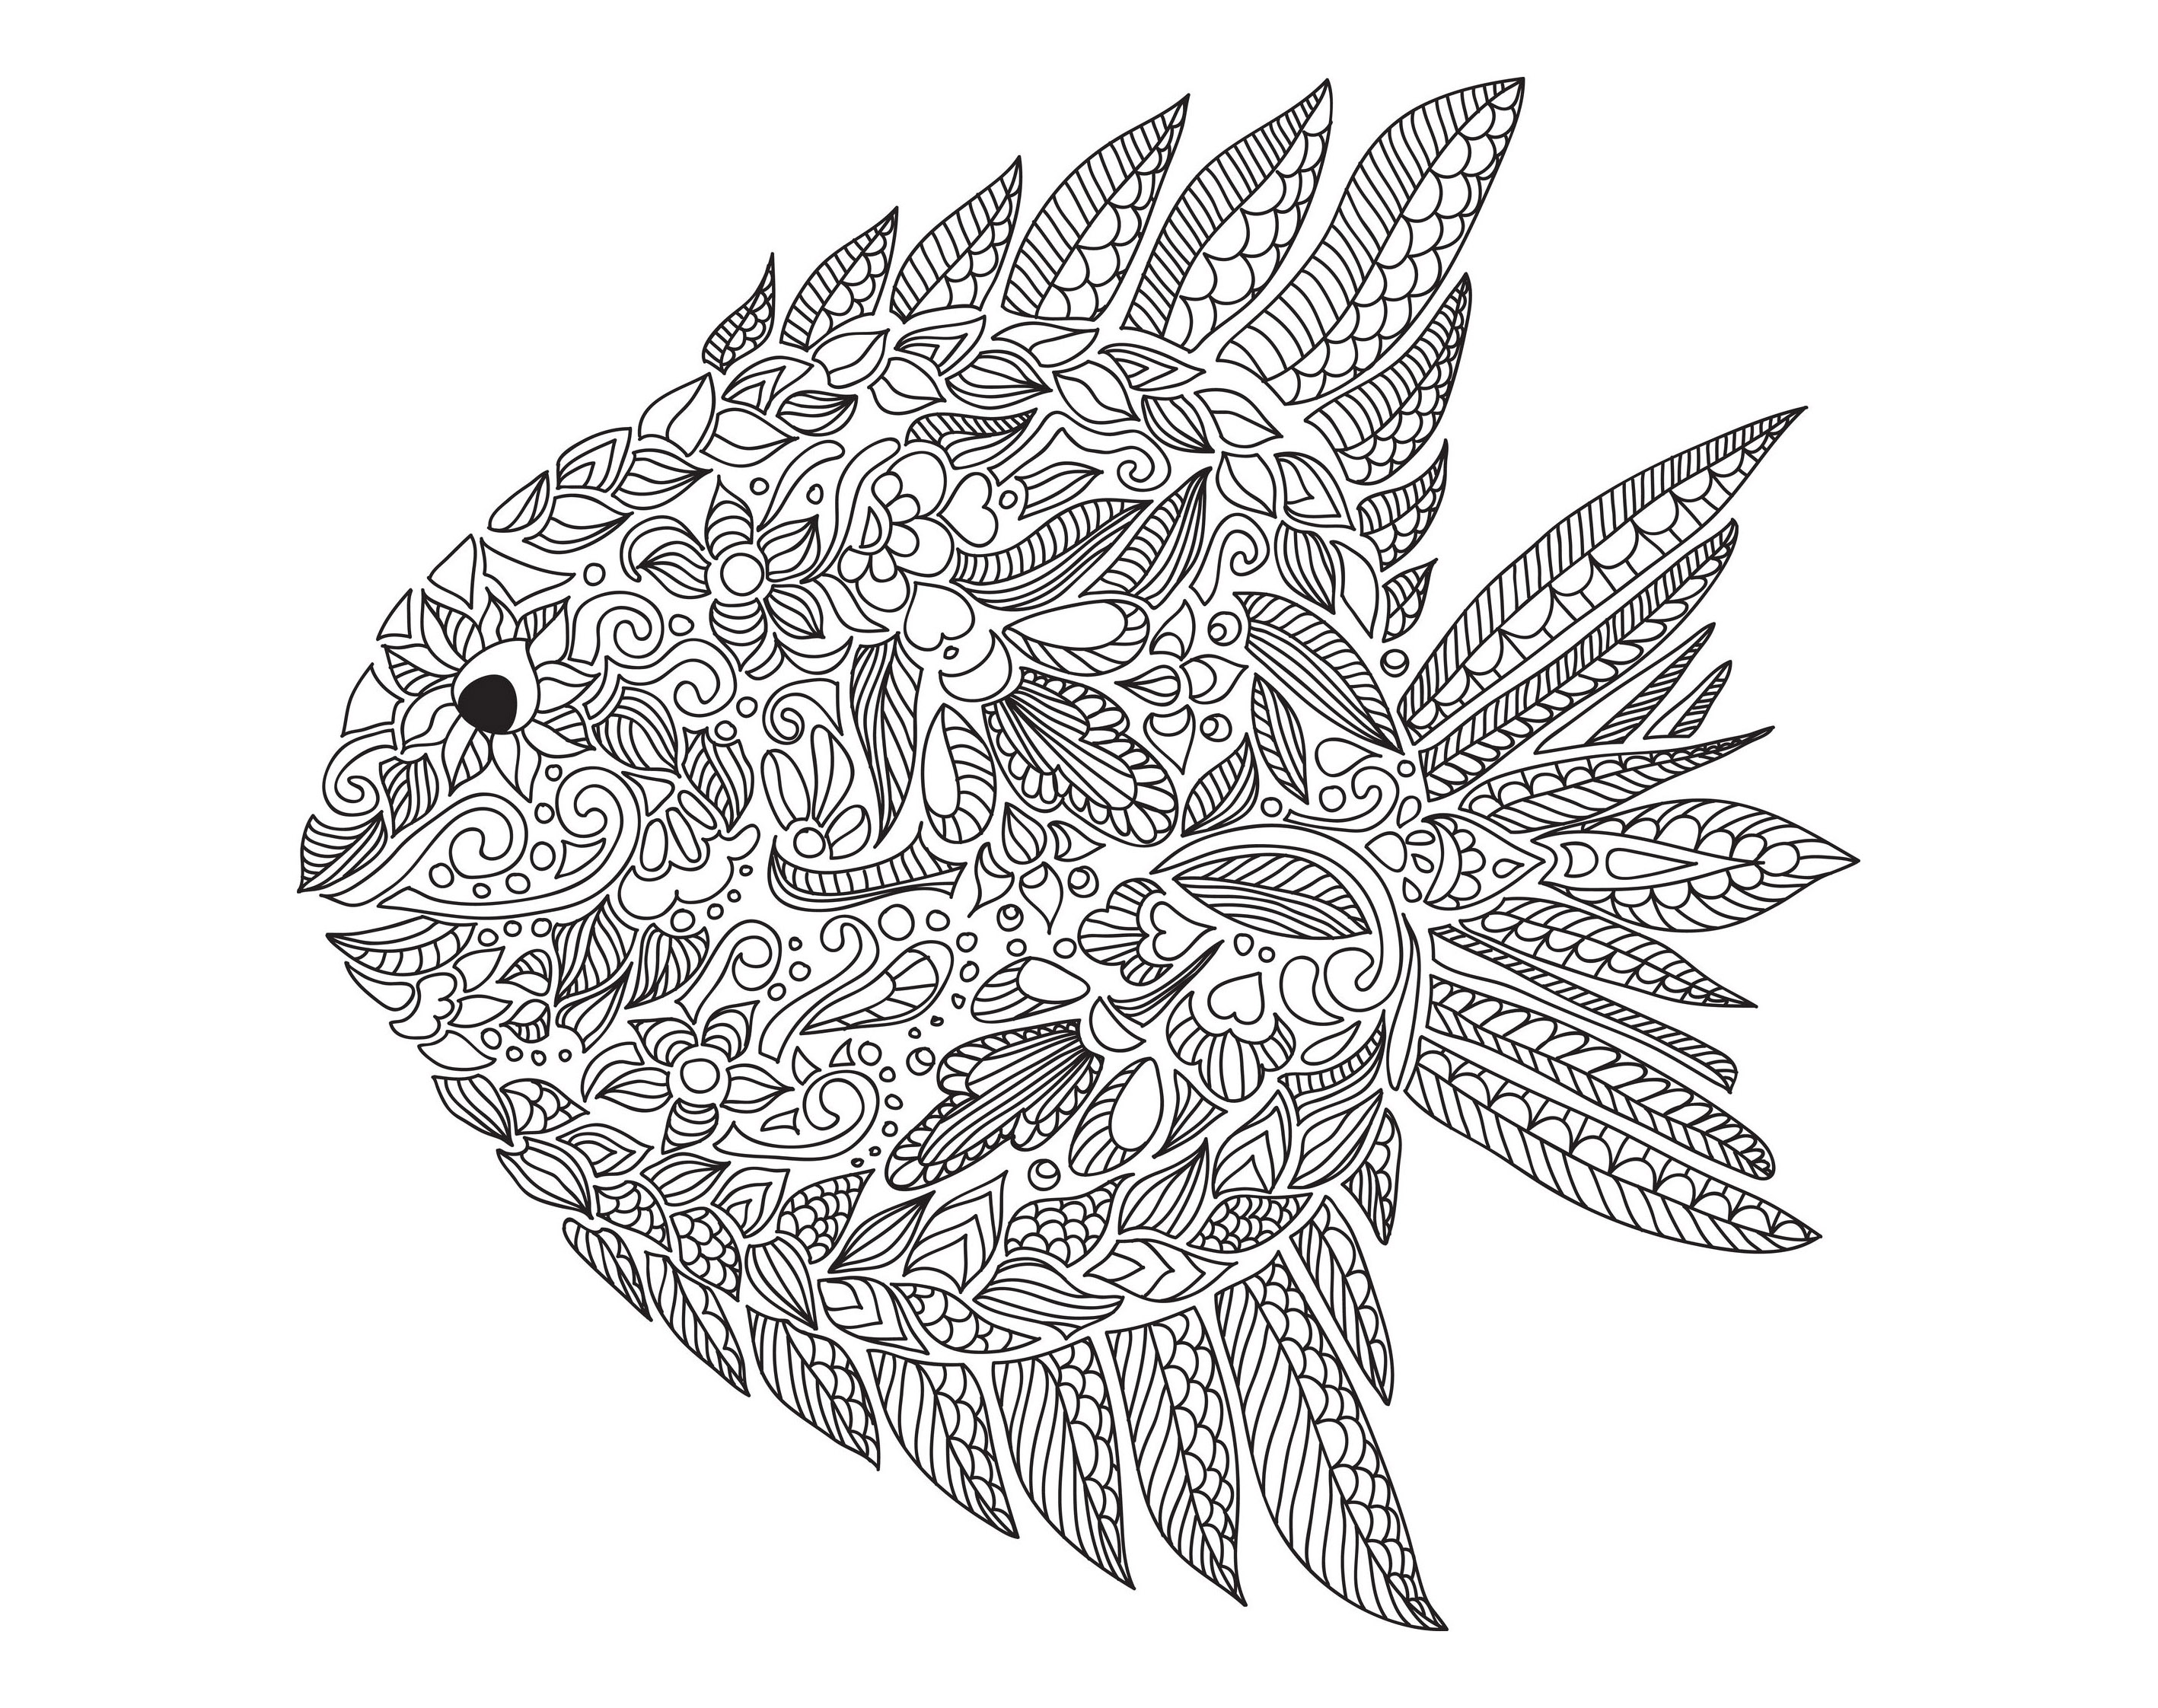 Complex Zentangle Fish to color, Artist : Artnataliia   Source : 123rf